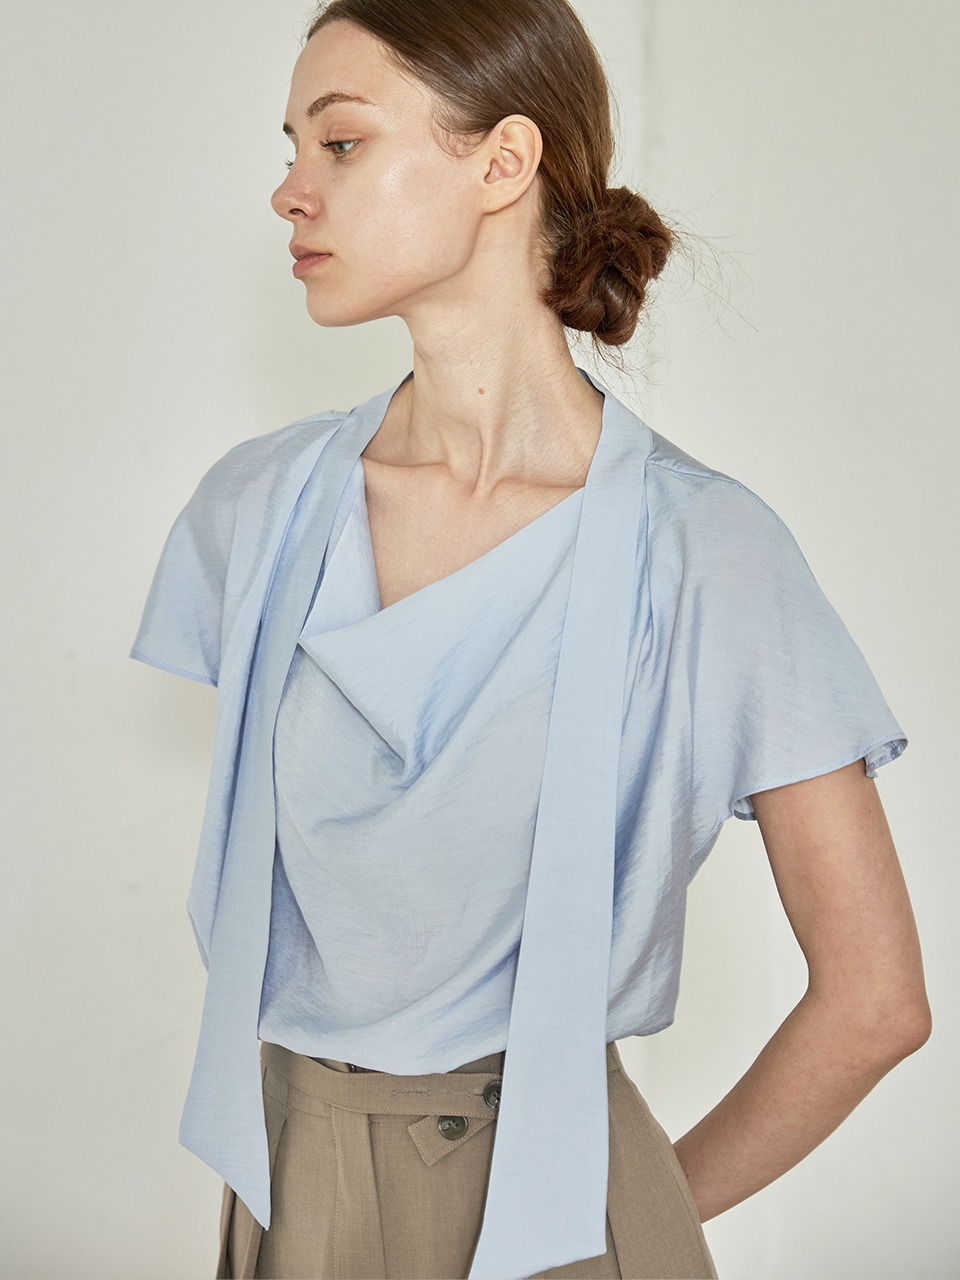 comos 862 cowl neck pin-tuck scarf blouse (sky blue) (5월 29일 예약배송)